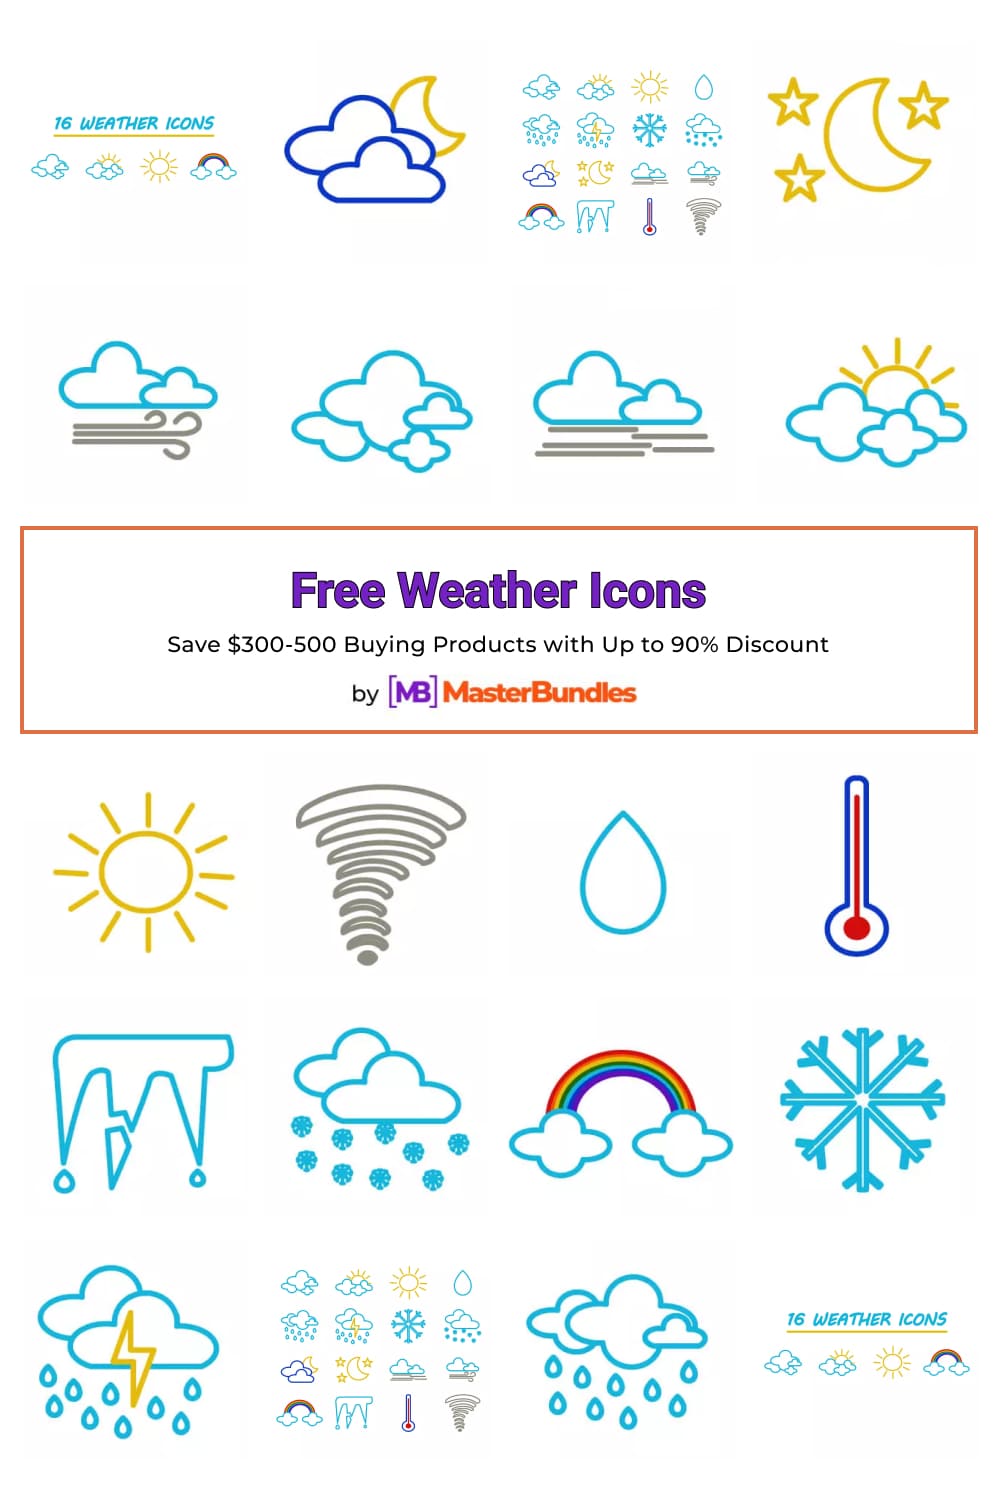 Free Weather Icons Pinterest image.